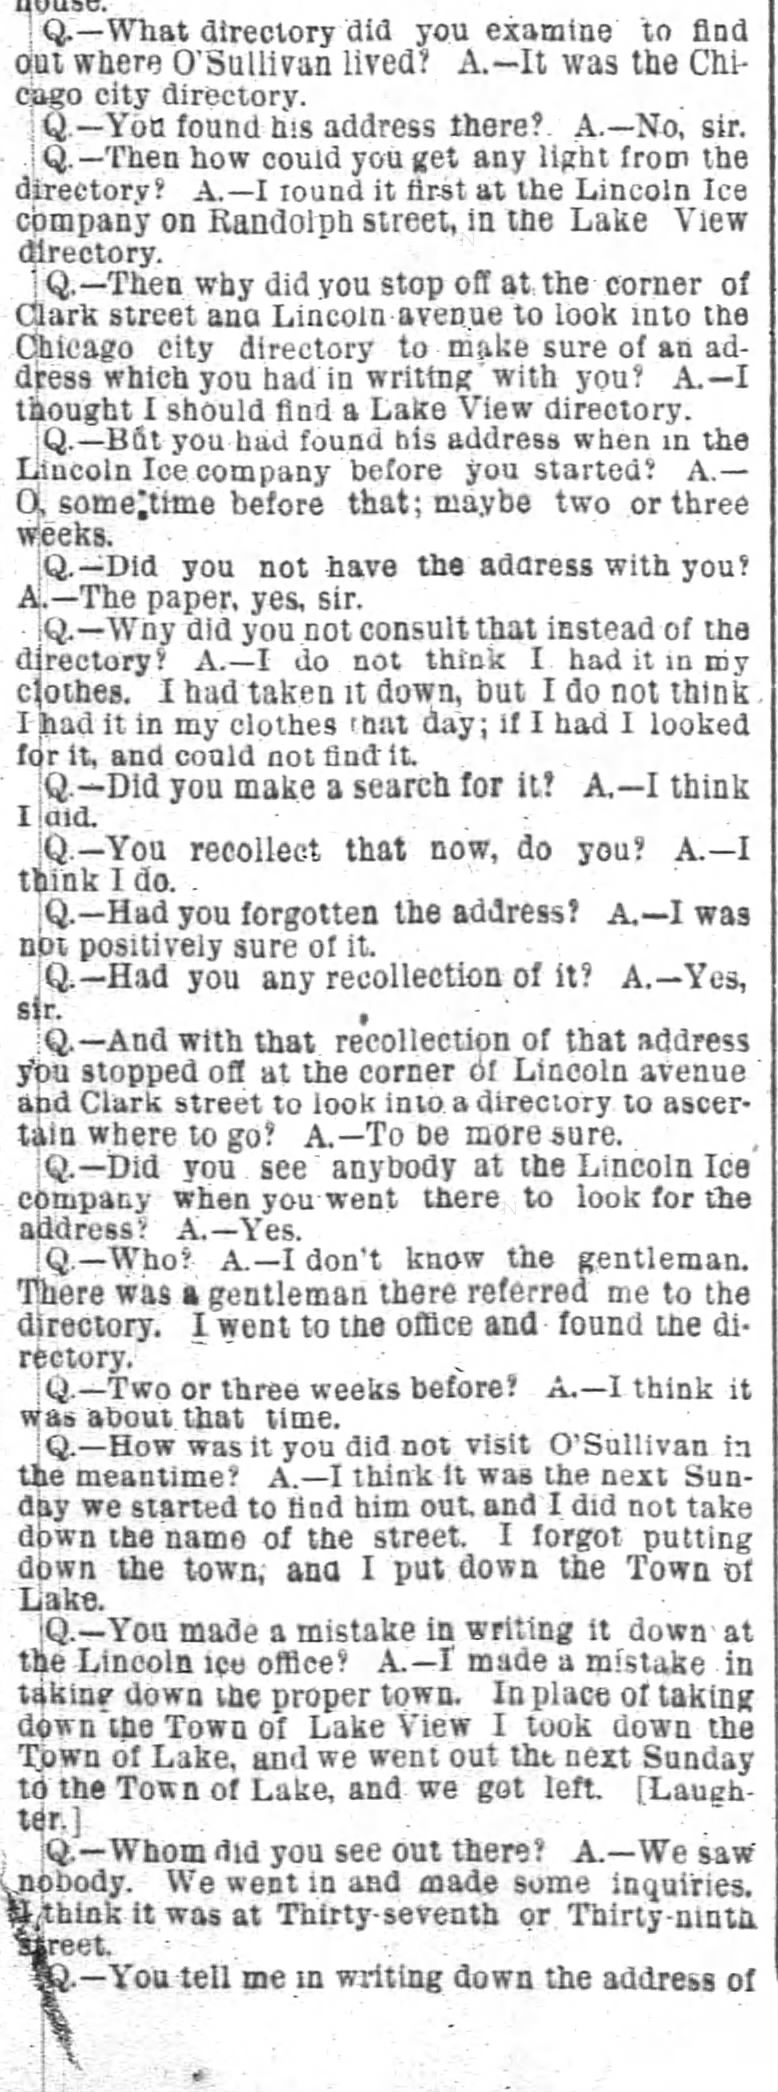 Murder Trial
November 19, 1889